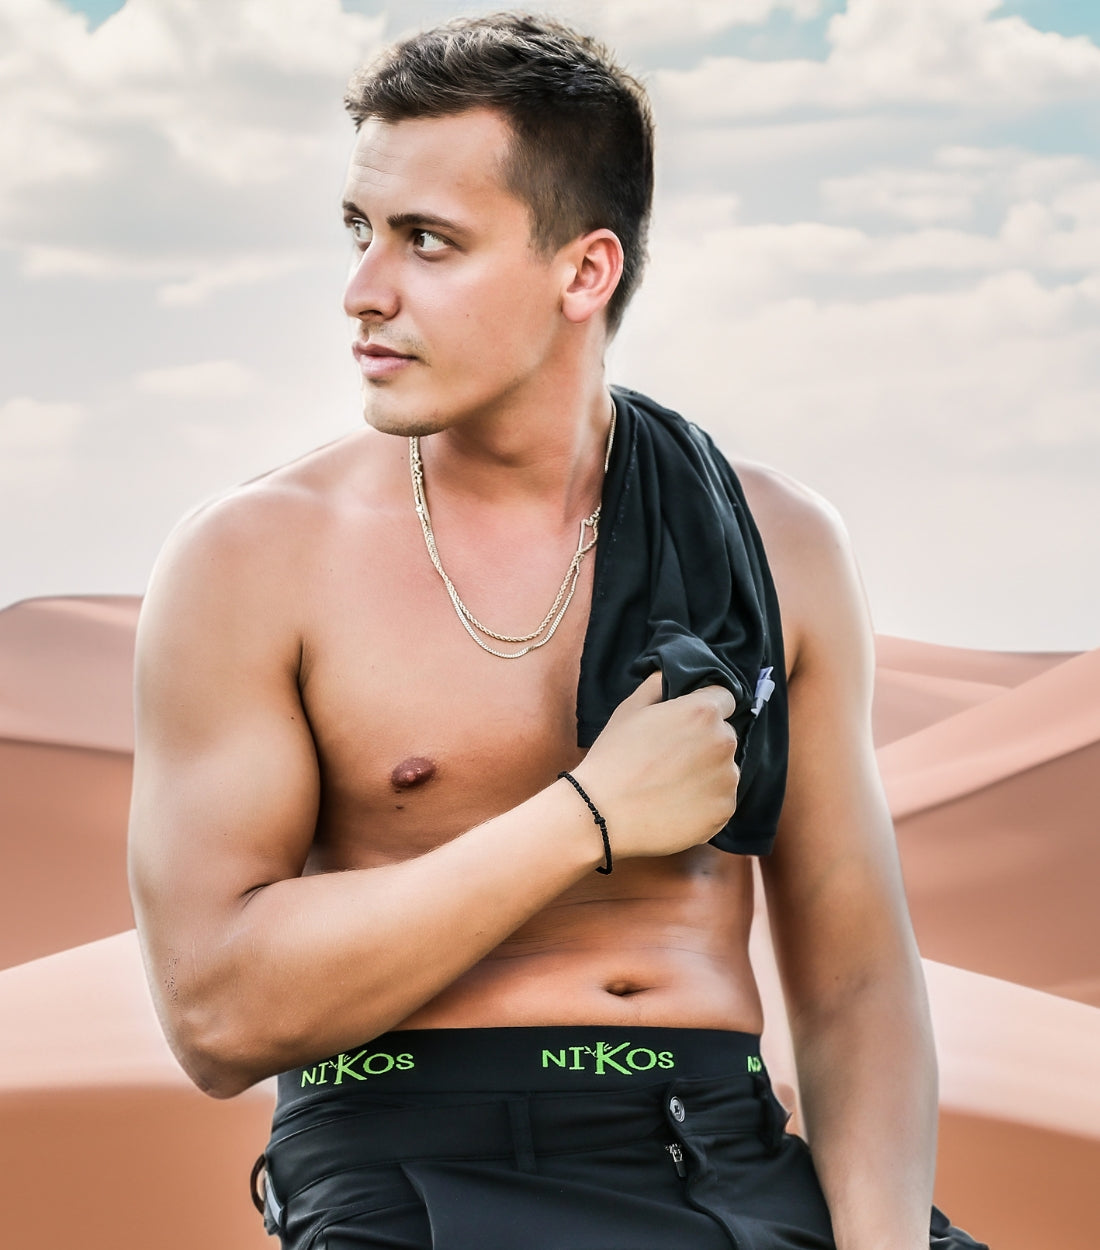 Model wearing Nikos Bamboo Boxer Briefs in a desert setting